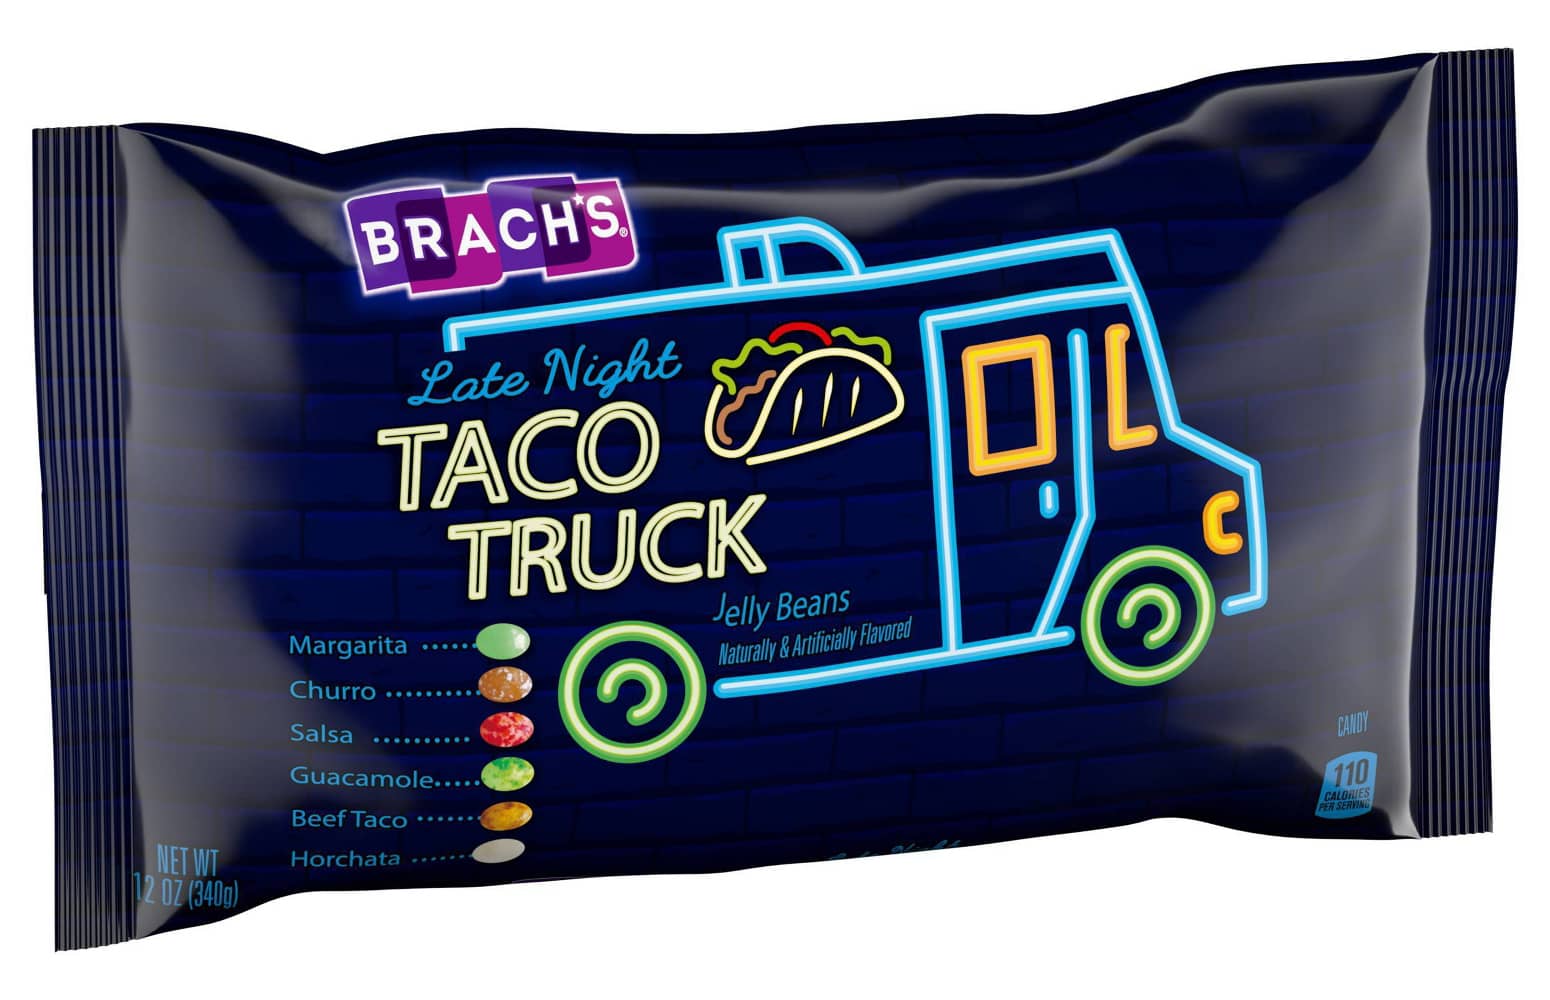 Brach's Late Night Taco Truck Jelly Beans